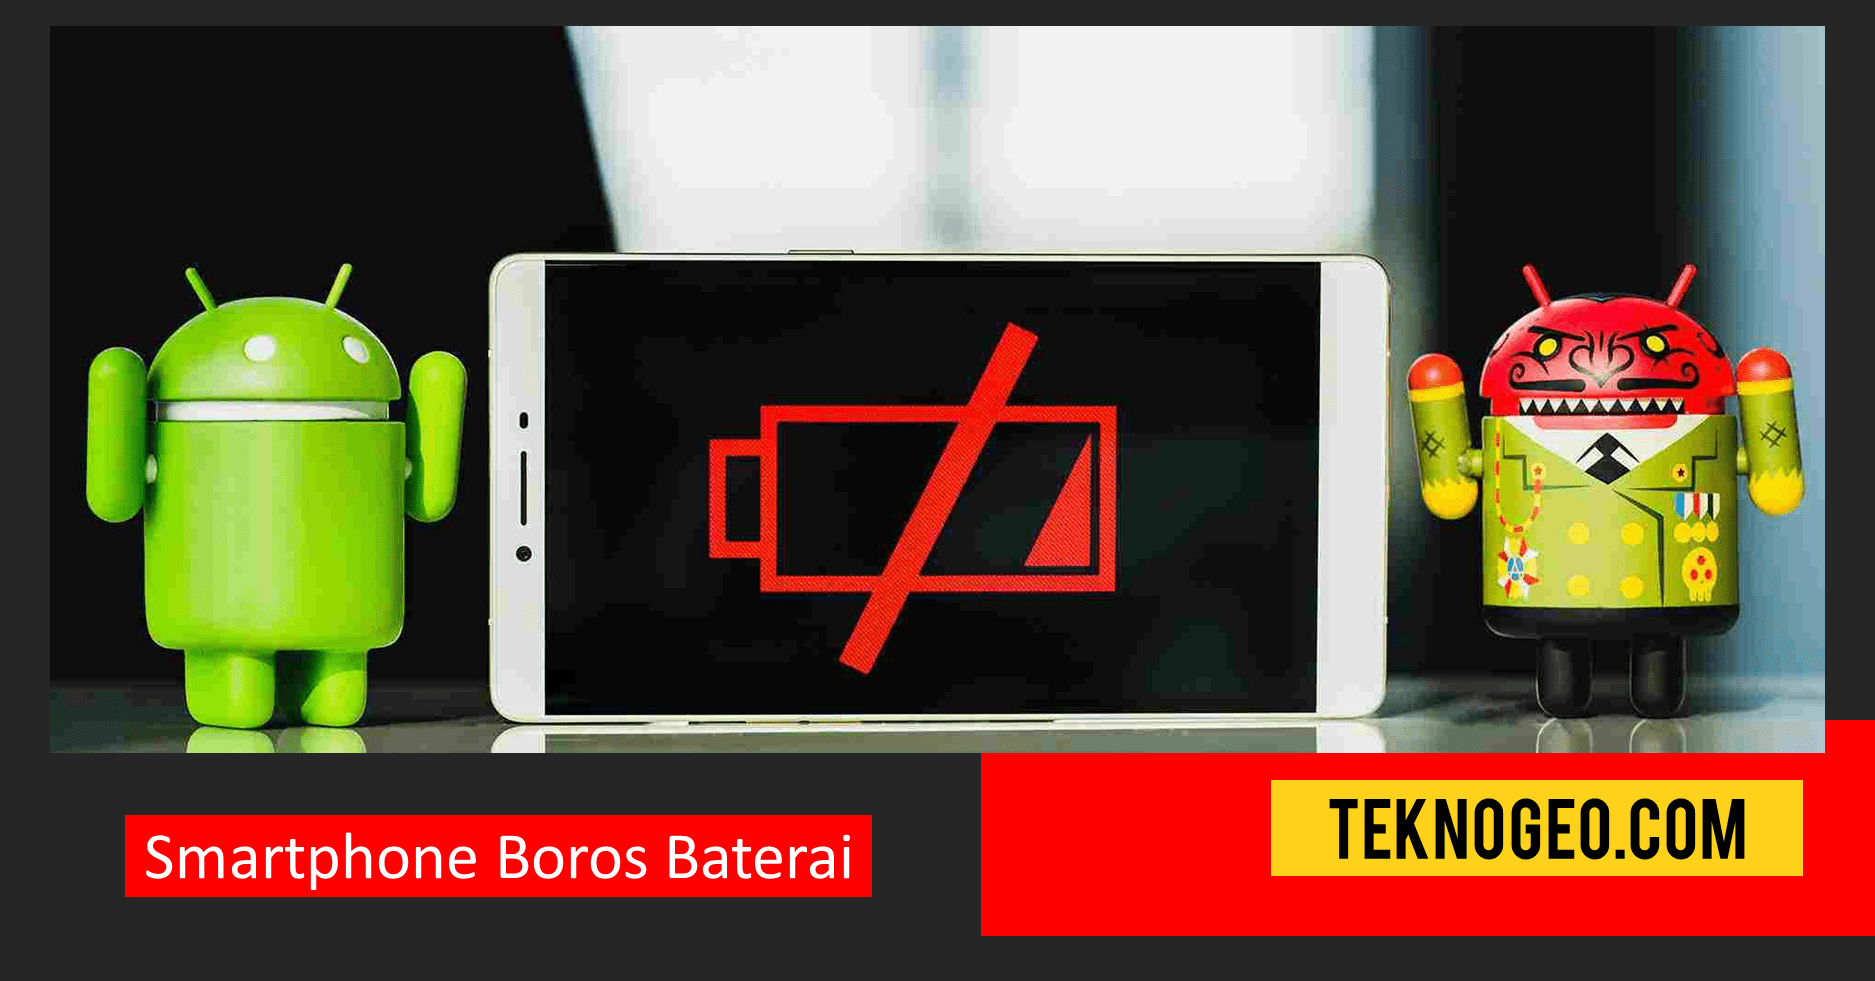 Smartphone Boros Baterai